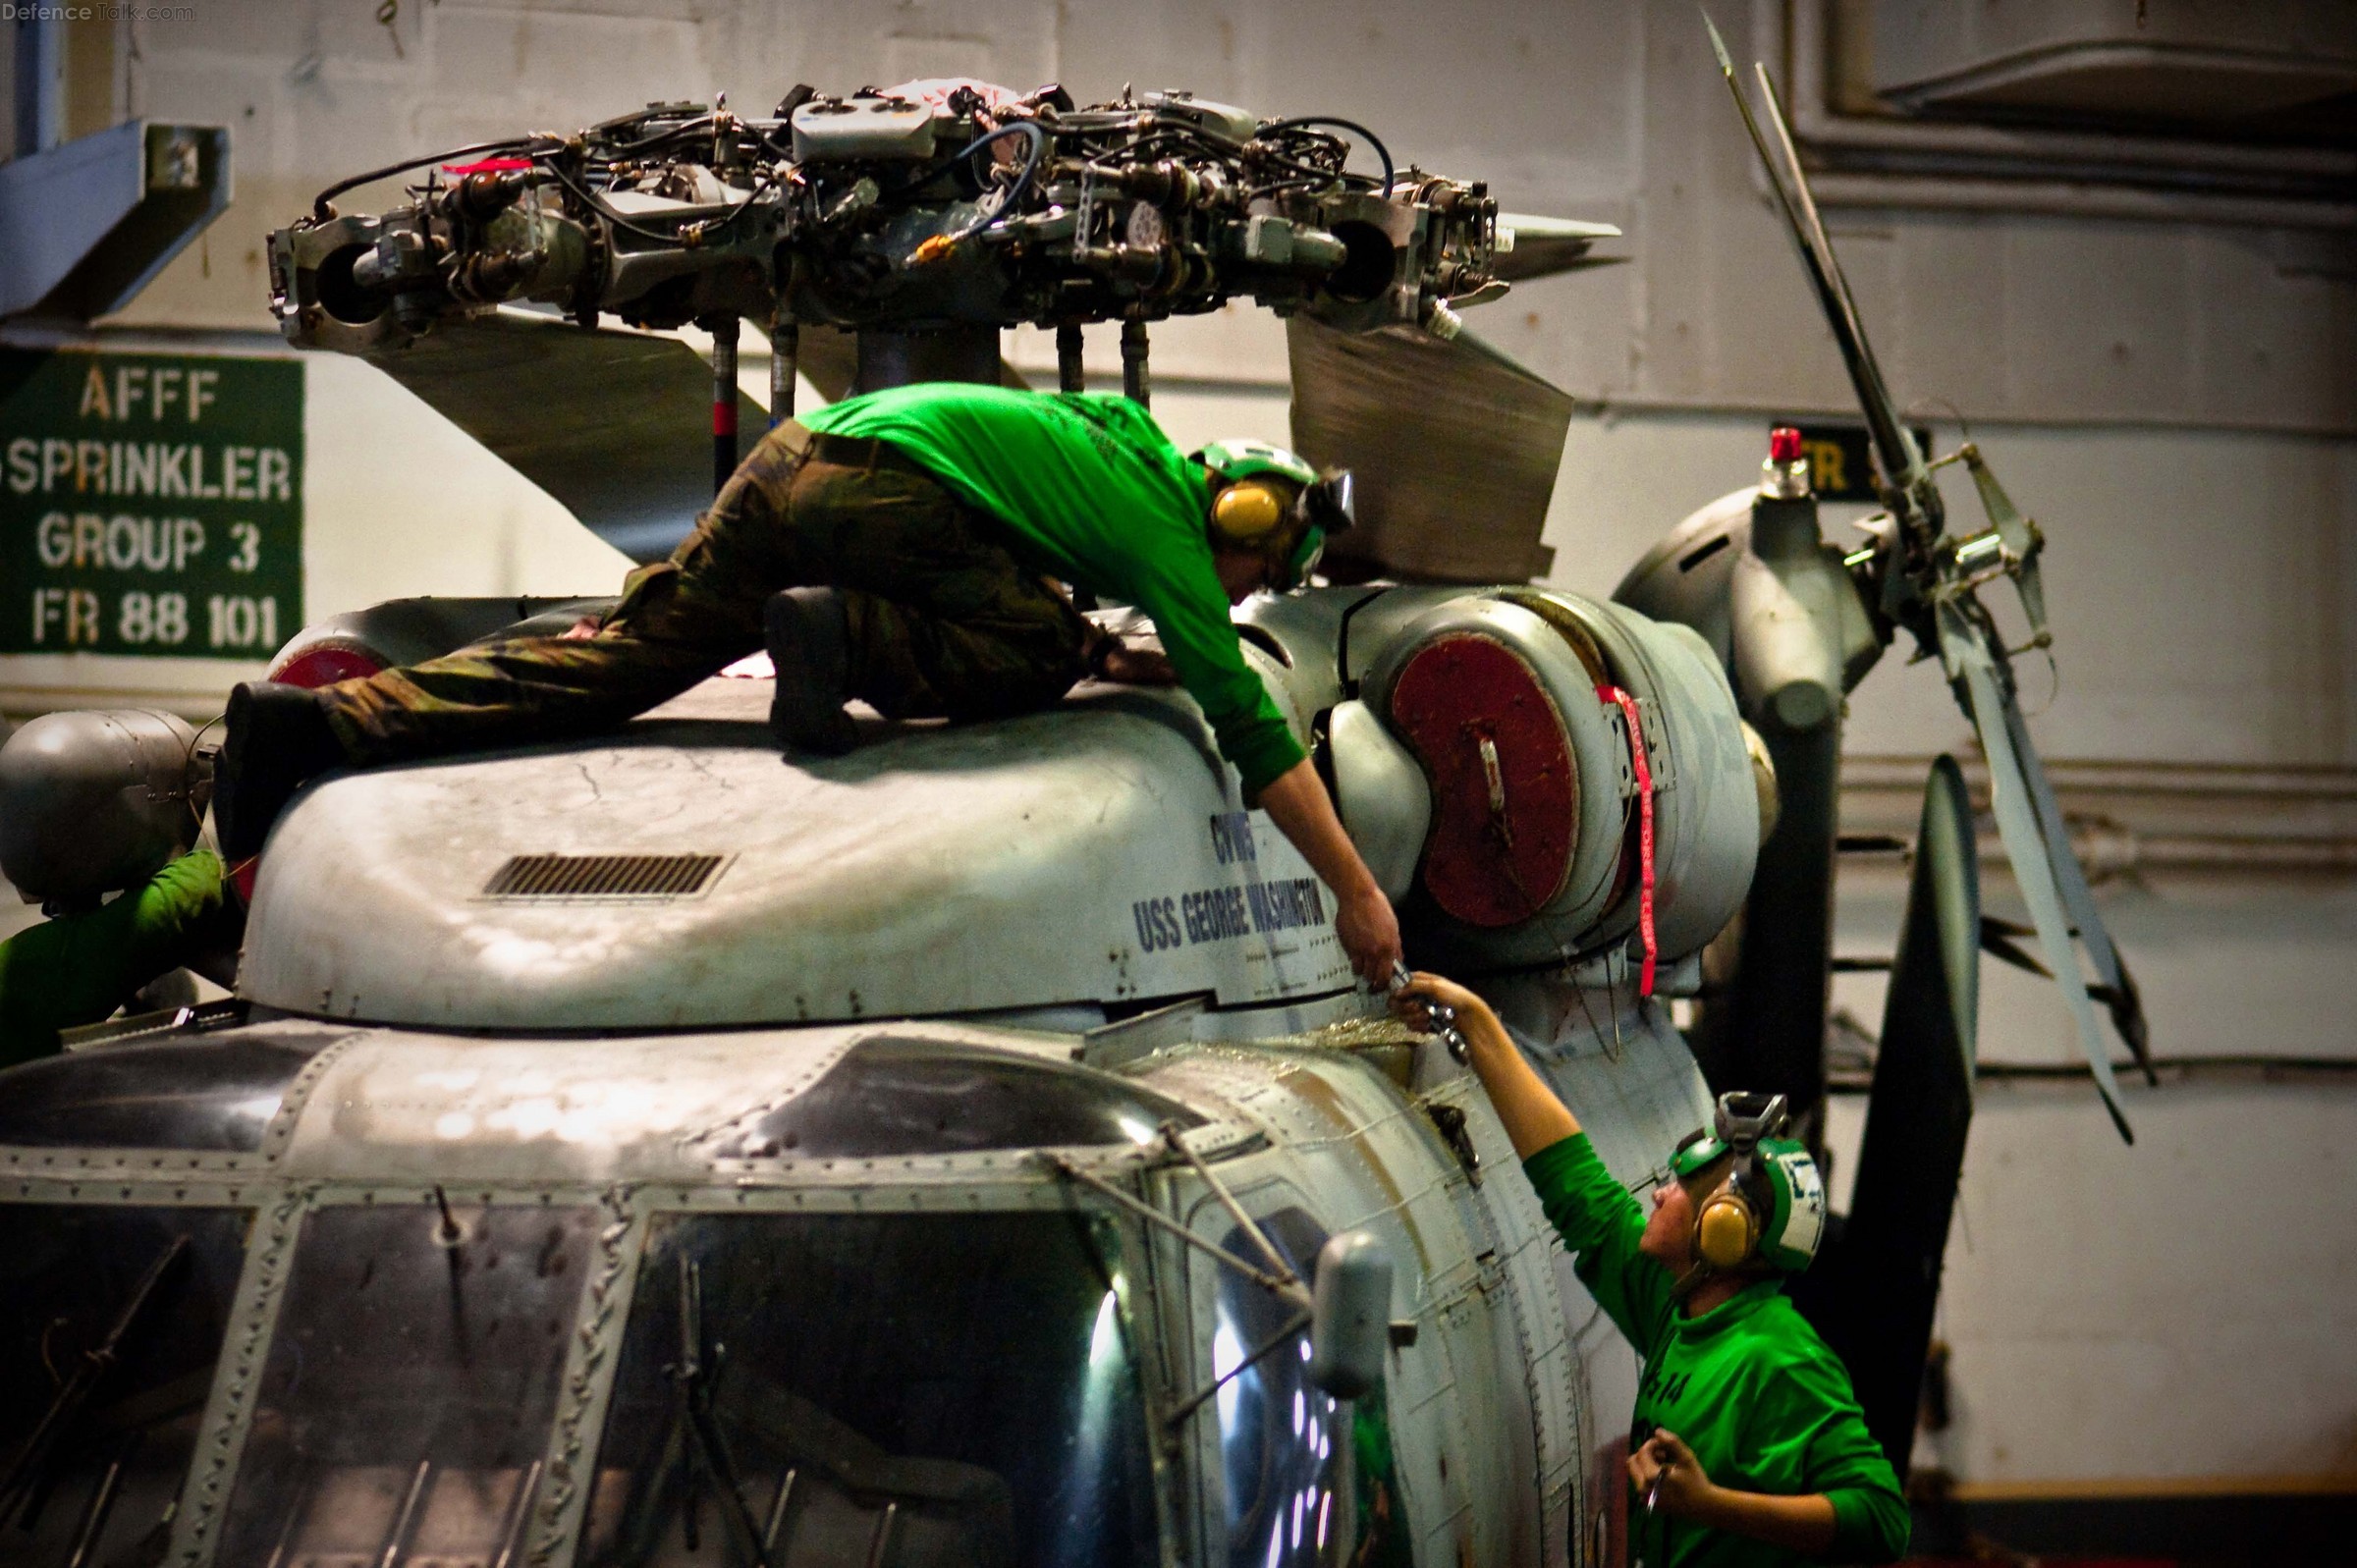 SH-60 helicopter - Aviation mechanics perform maintenance